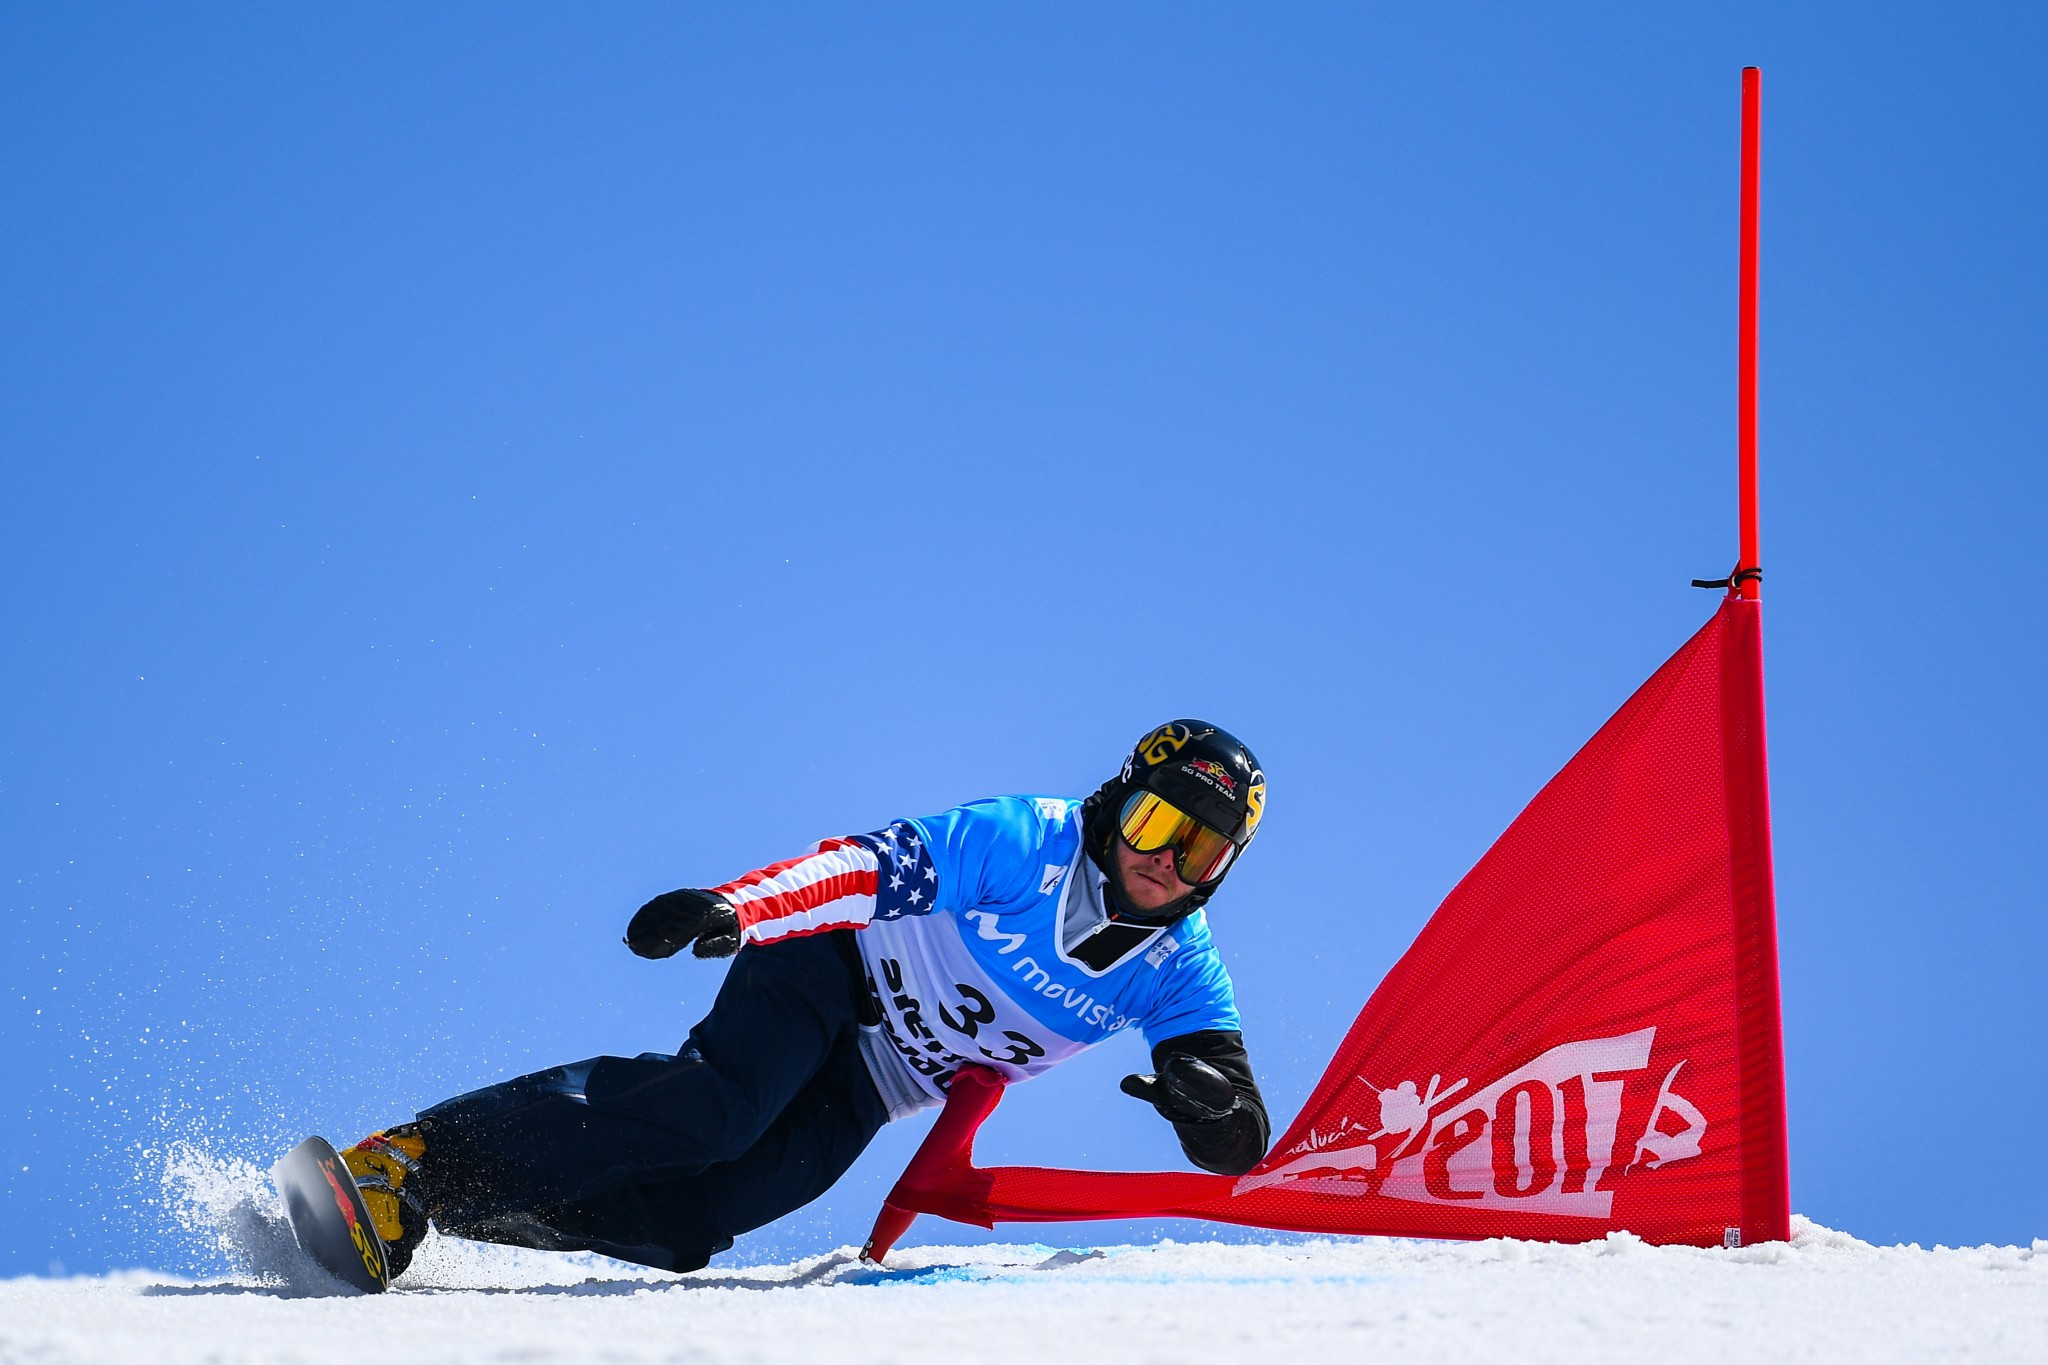 American snowboarder Reiter announces retirement